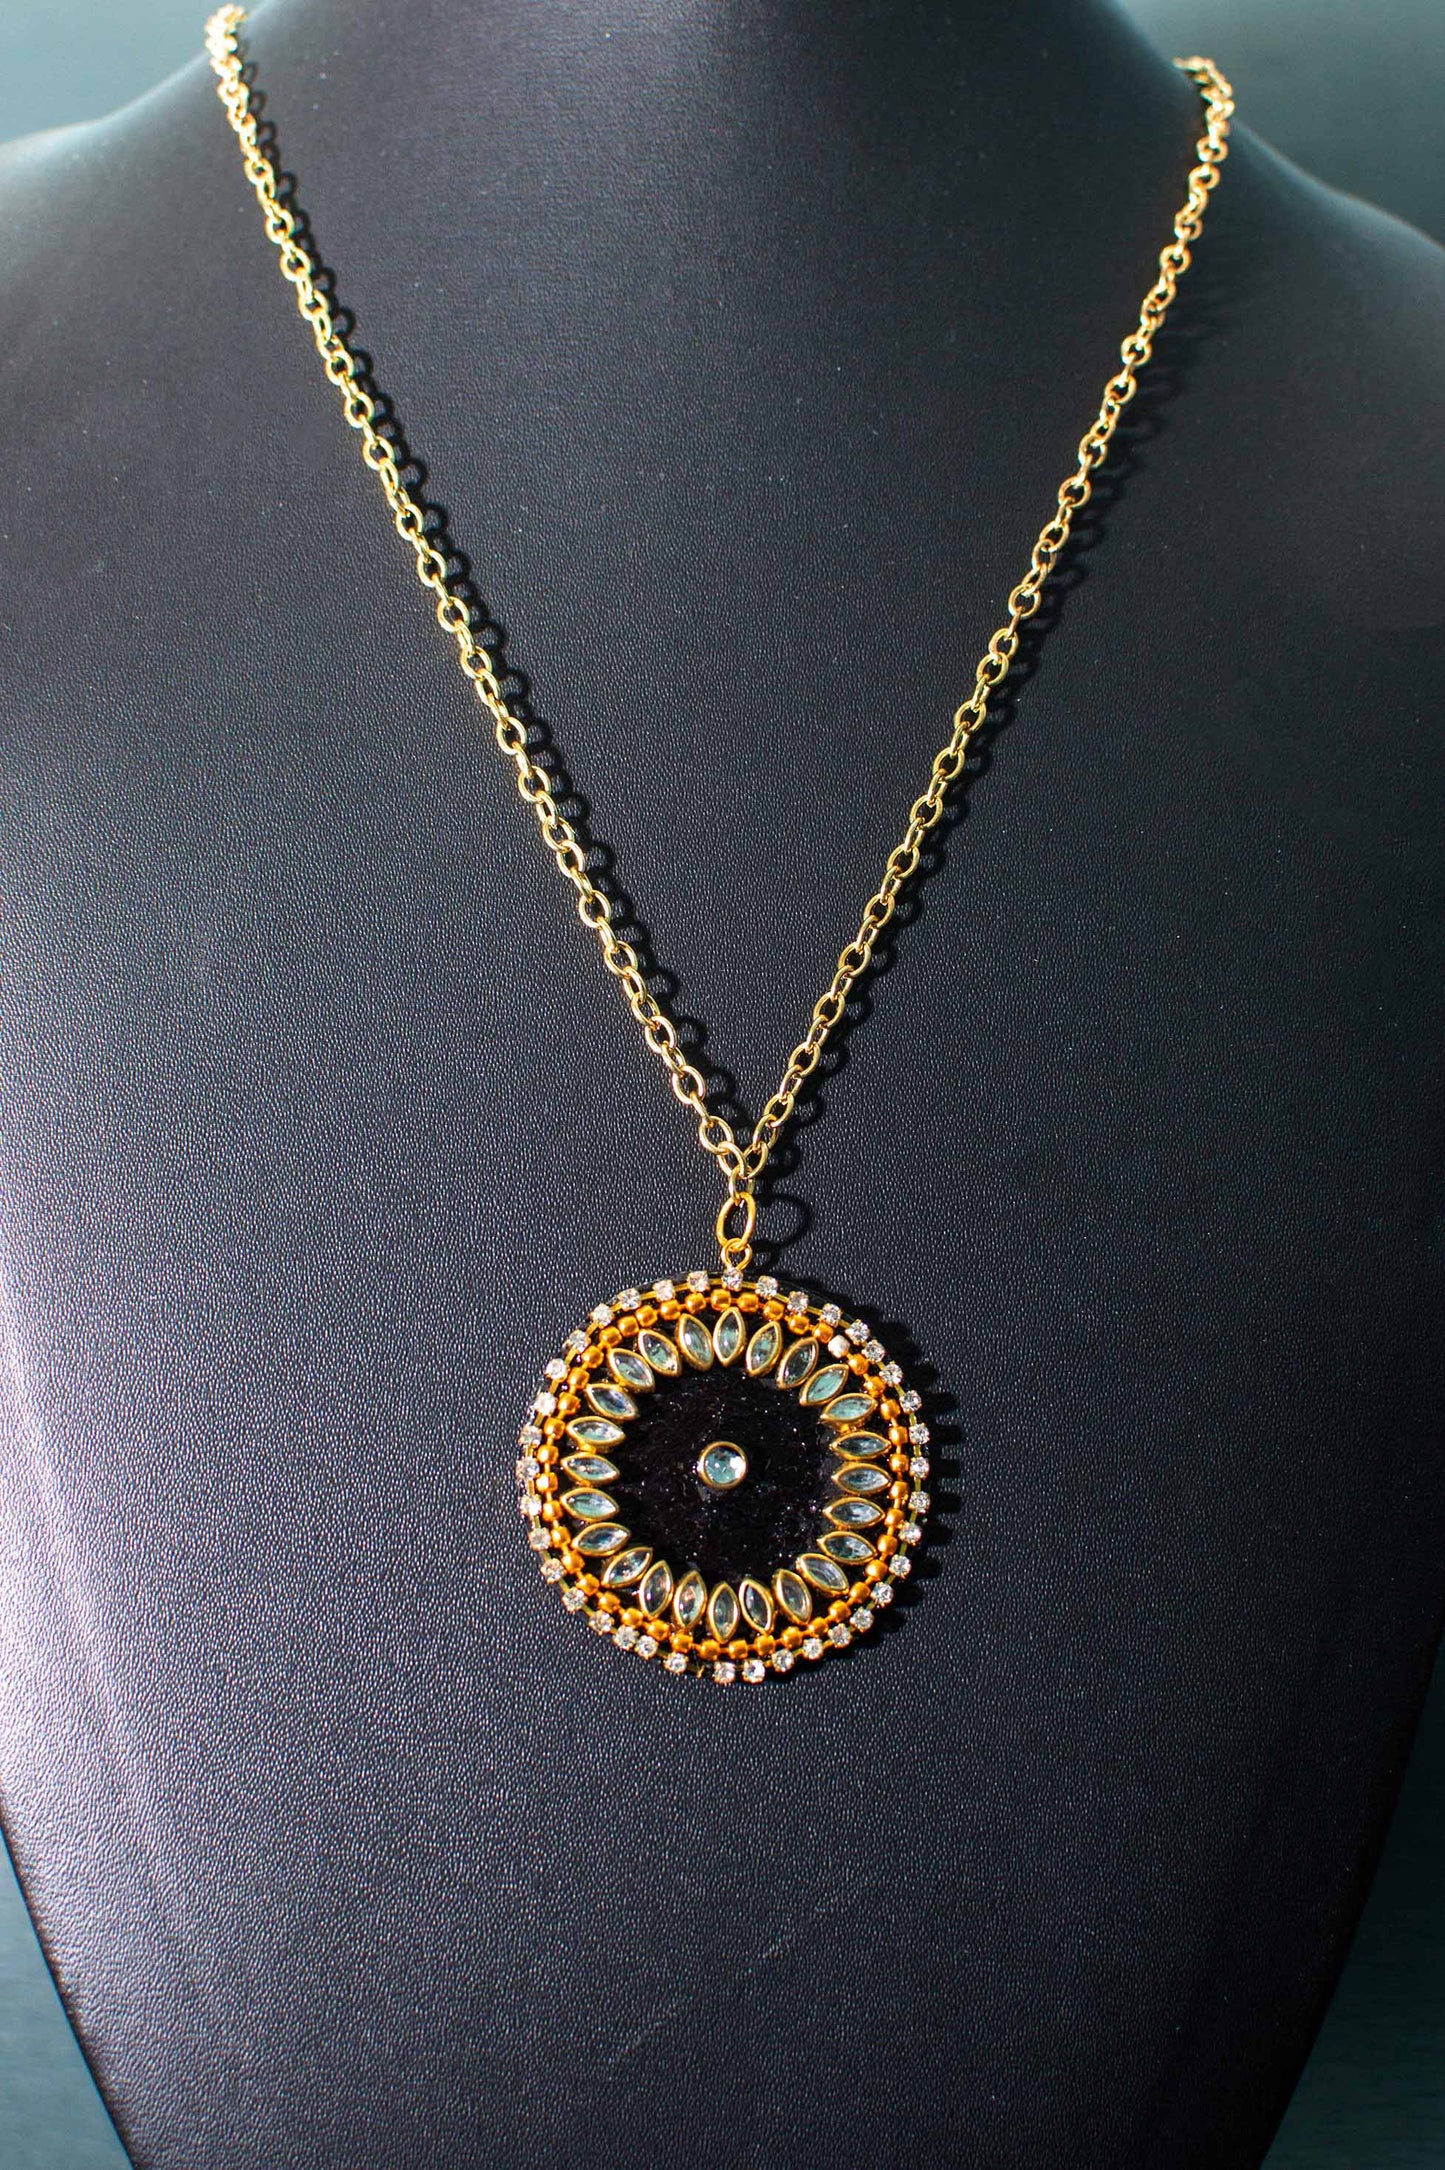 Black Kundan Necklace Set, Handpainted : Handmade